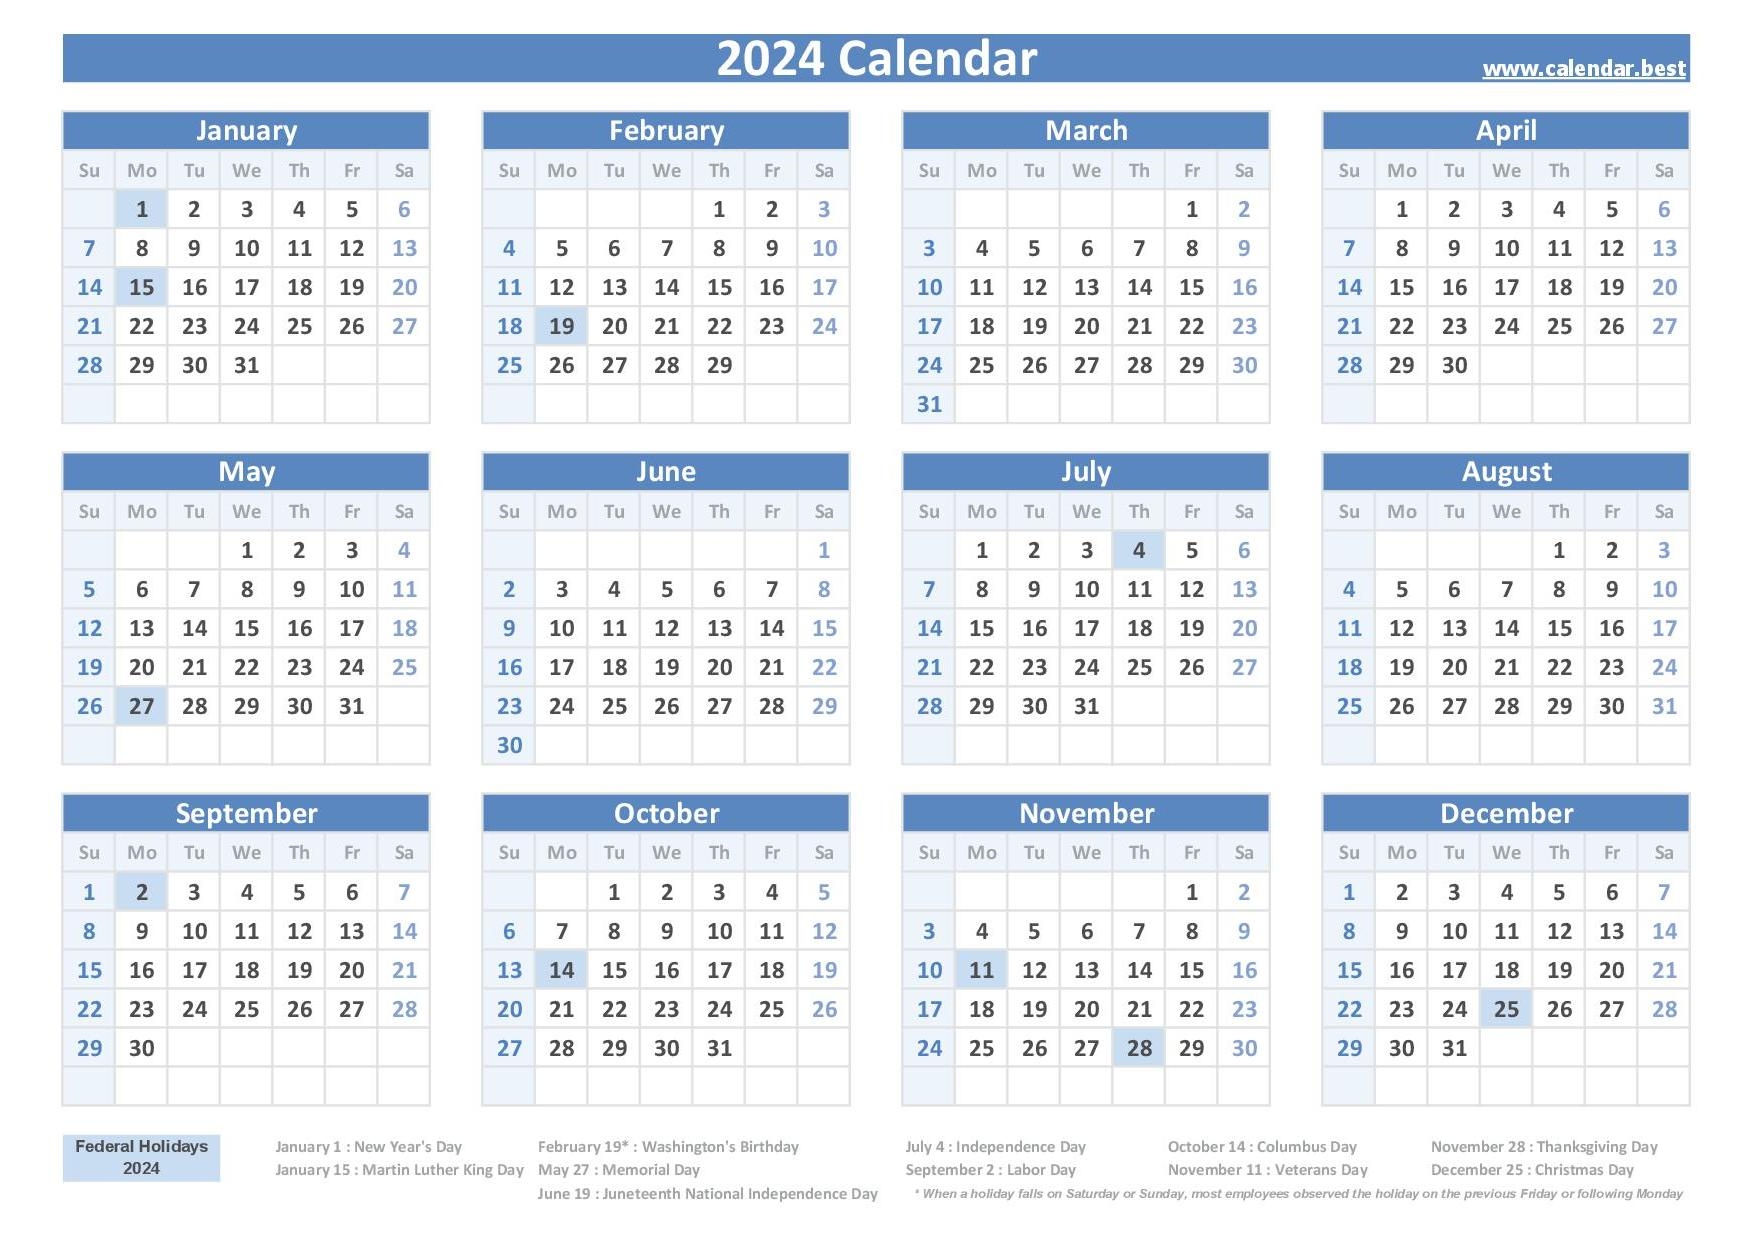 2024 Us Federal Holiday Calendar Printable Bill Marjie - Free Printable 2024 Calendar With Us Holidays For Crafts